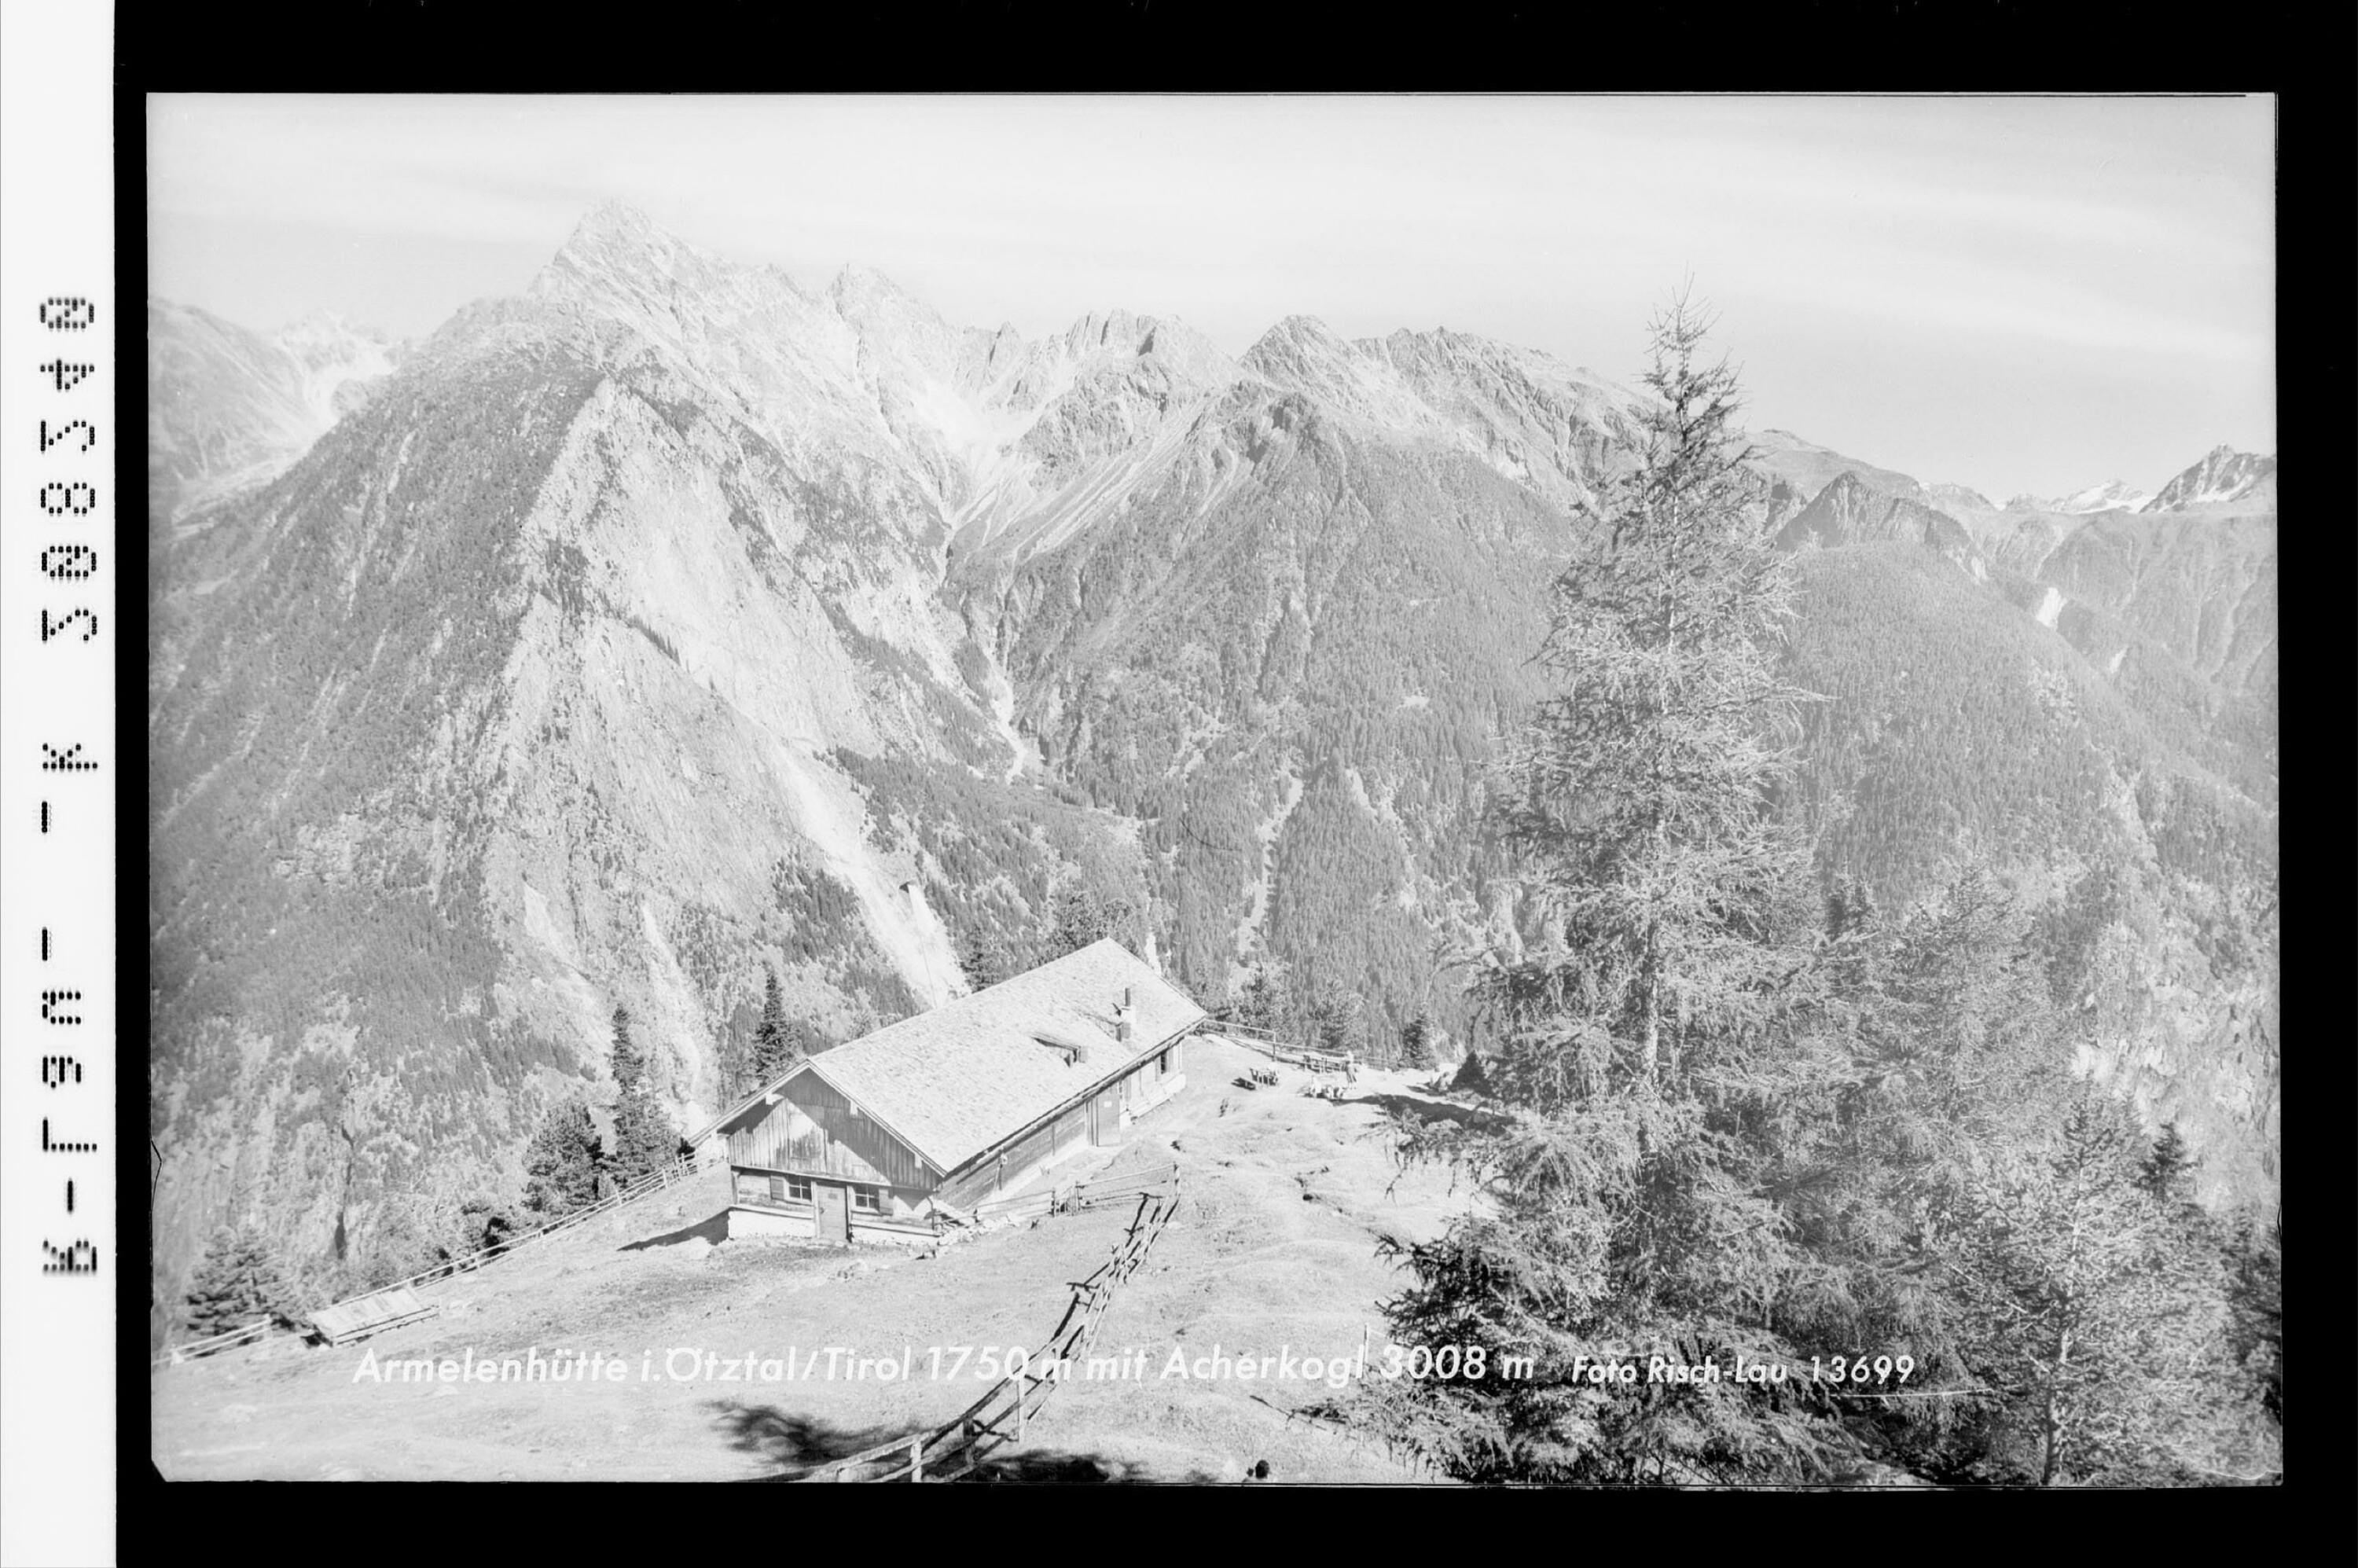 Armelenhütte 1750 m im Ötztal / Tirol mit Acherkogl 3008 m></div>


    <hr>
    <div class=